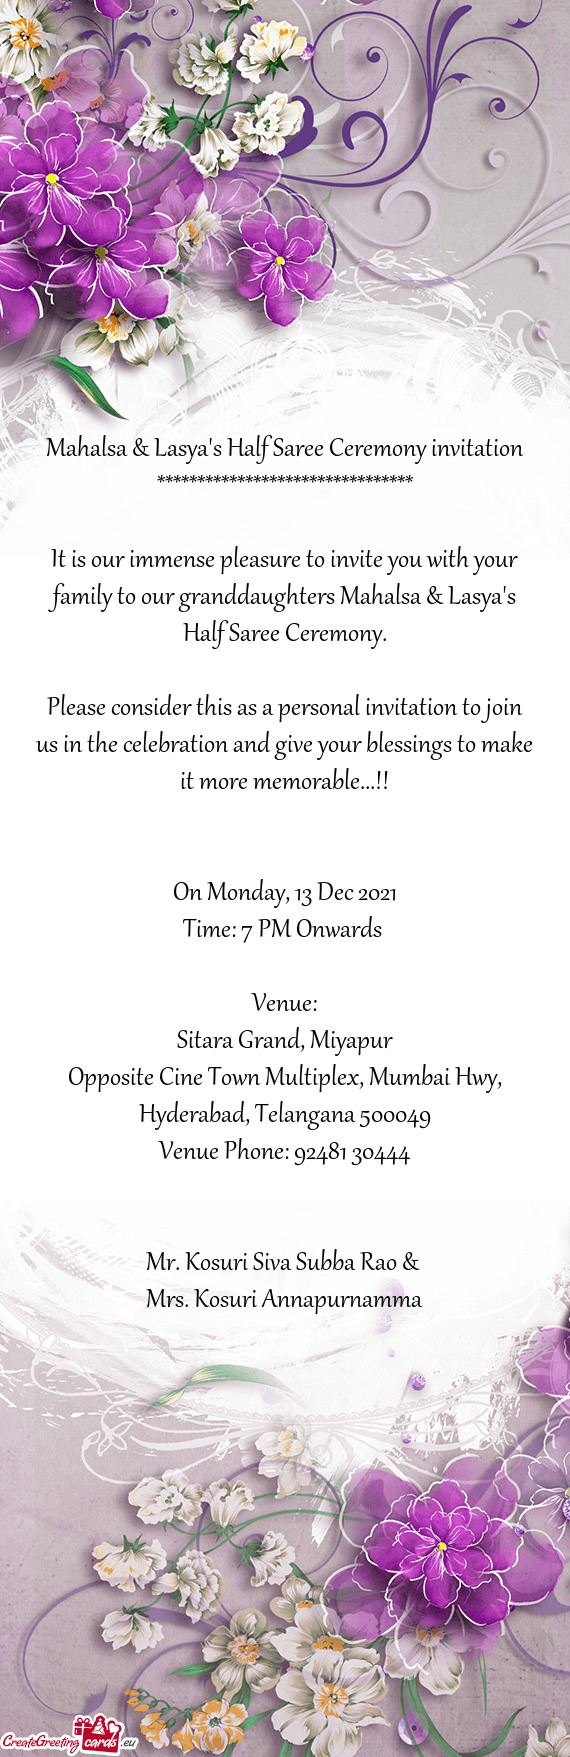 Mahalsa & Lasya's Half Saree Ceremony invitation